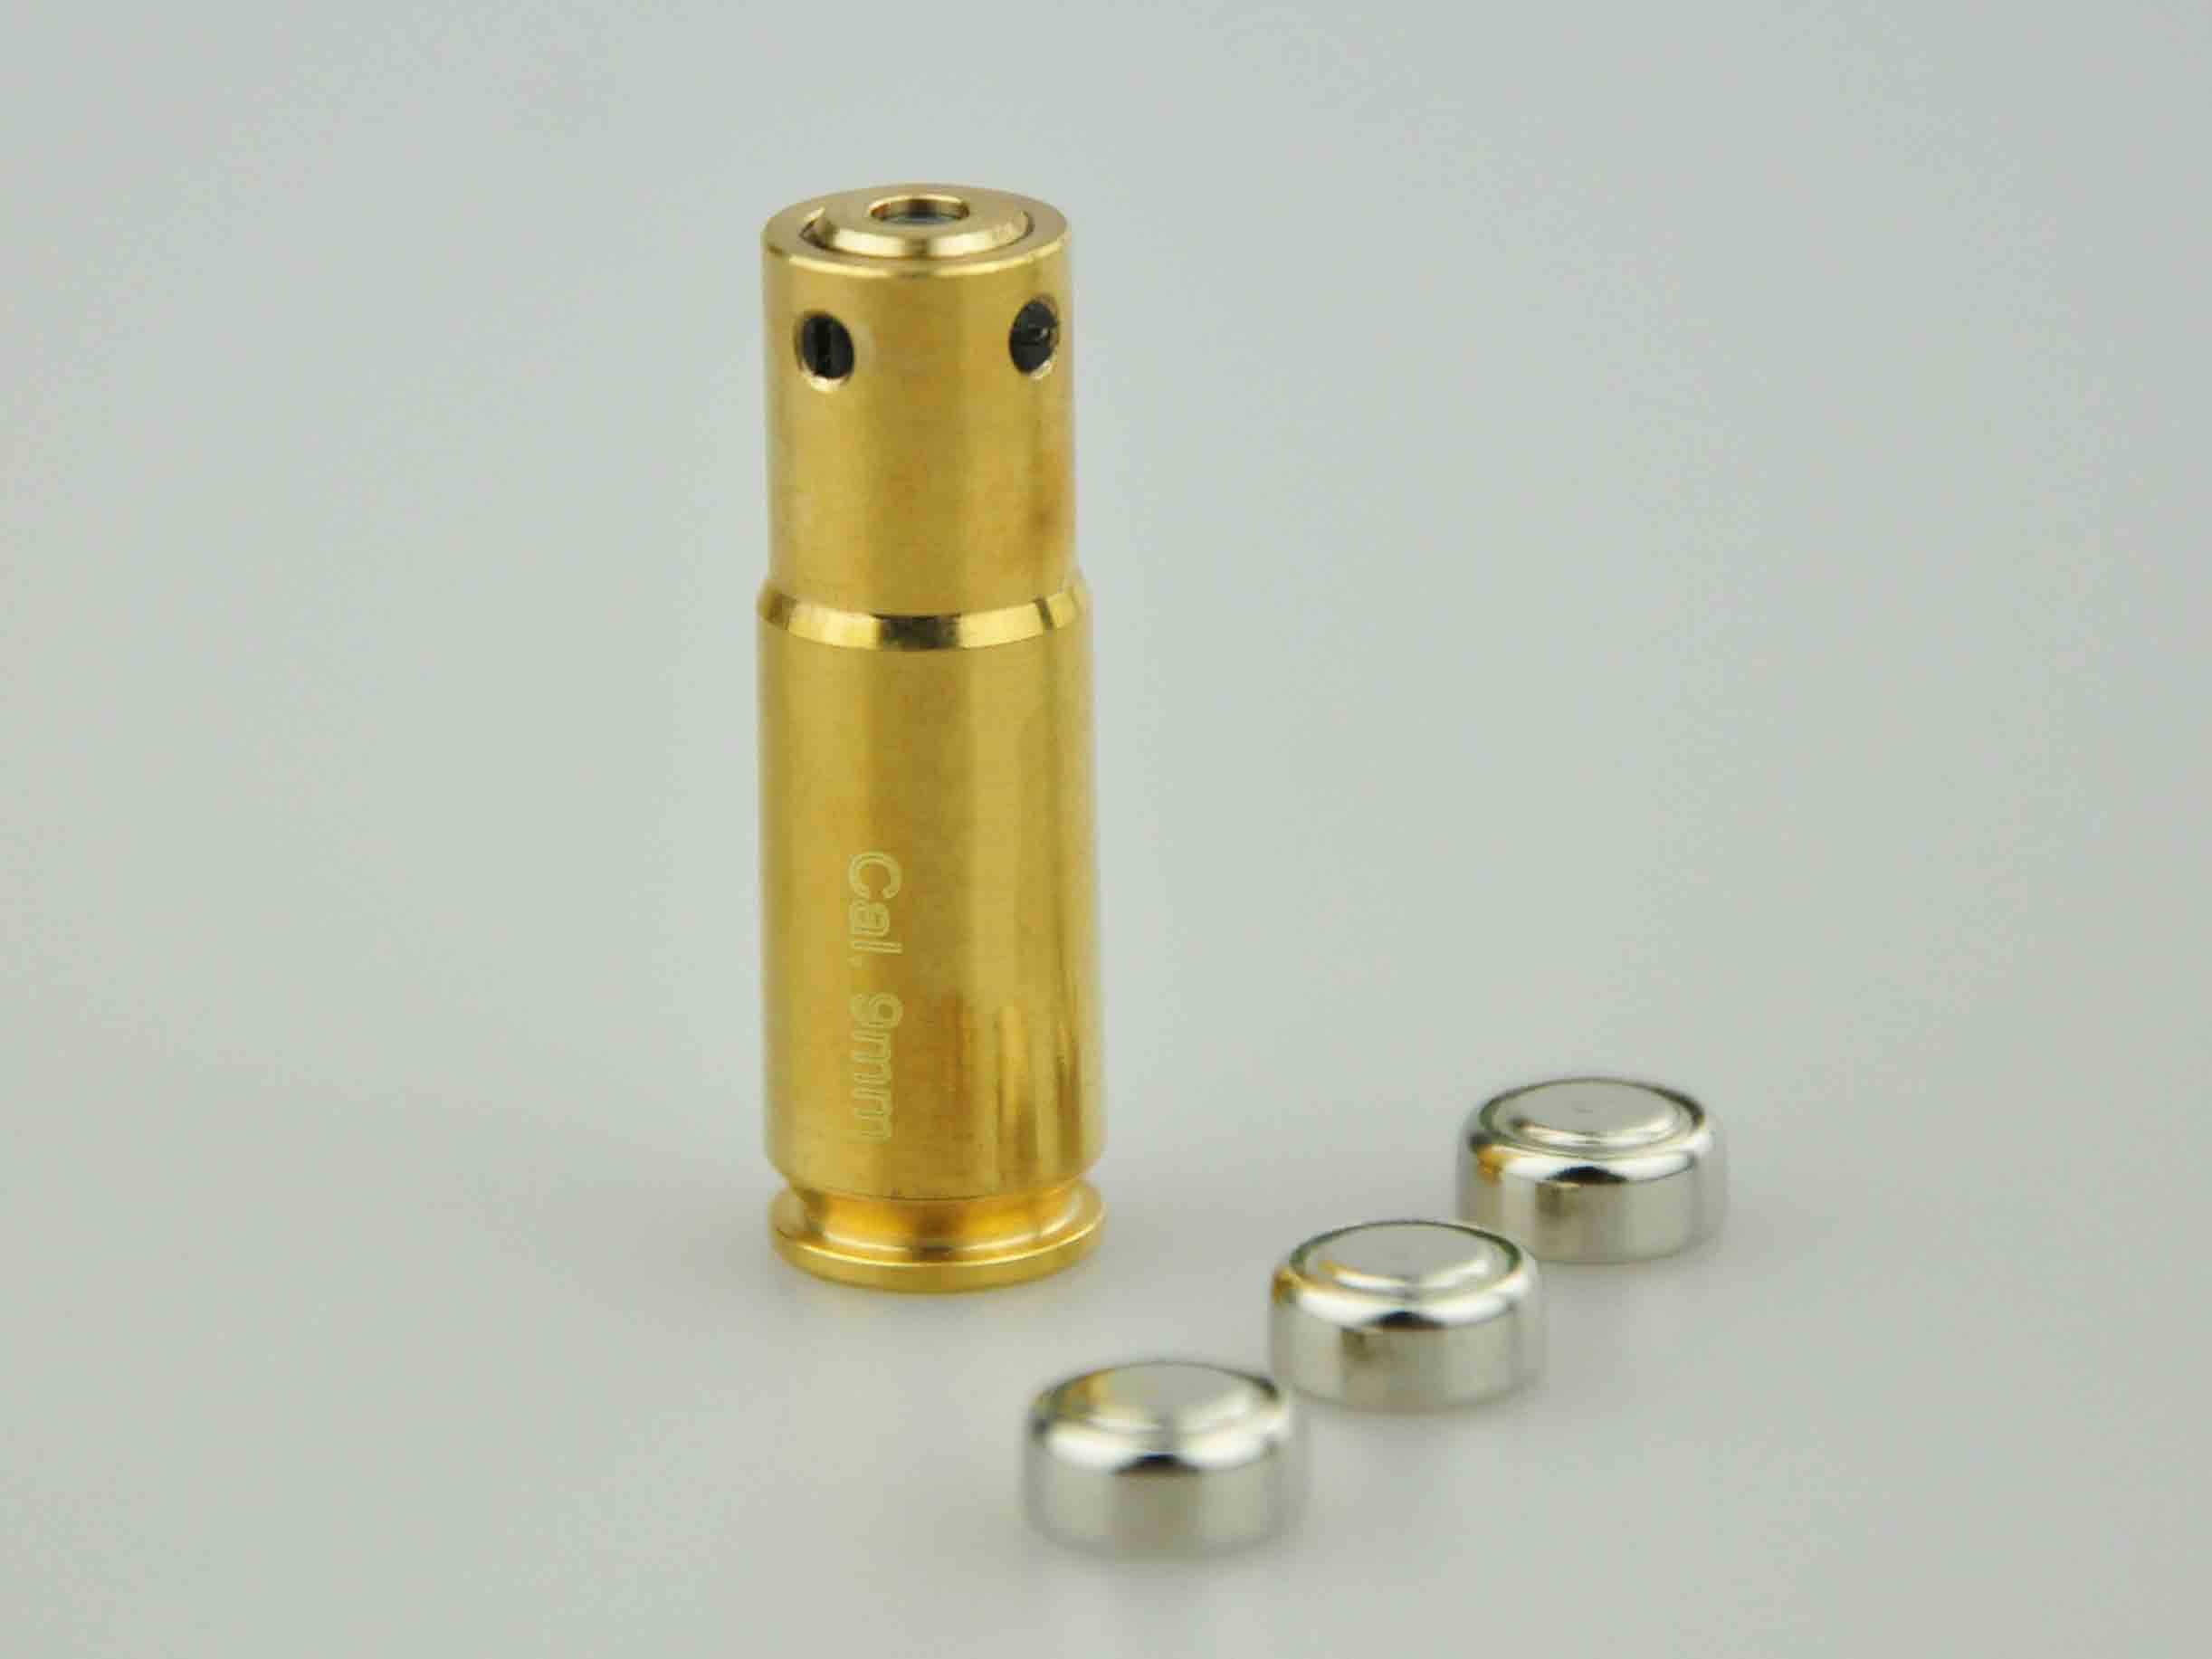 Caliber 9mm Laser Bore Sight (1)